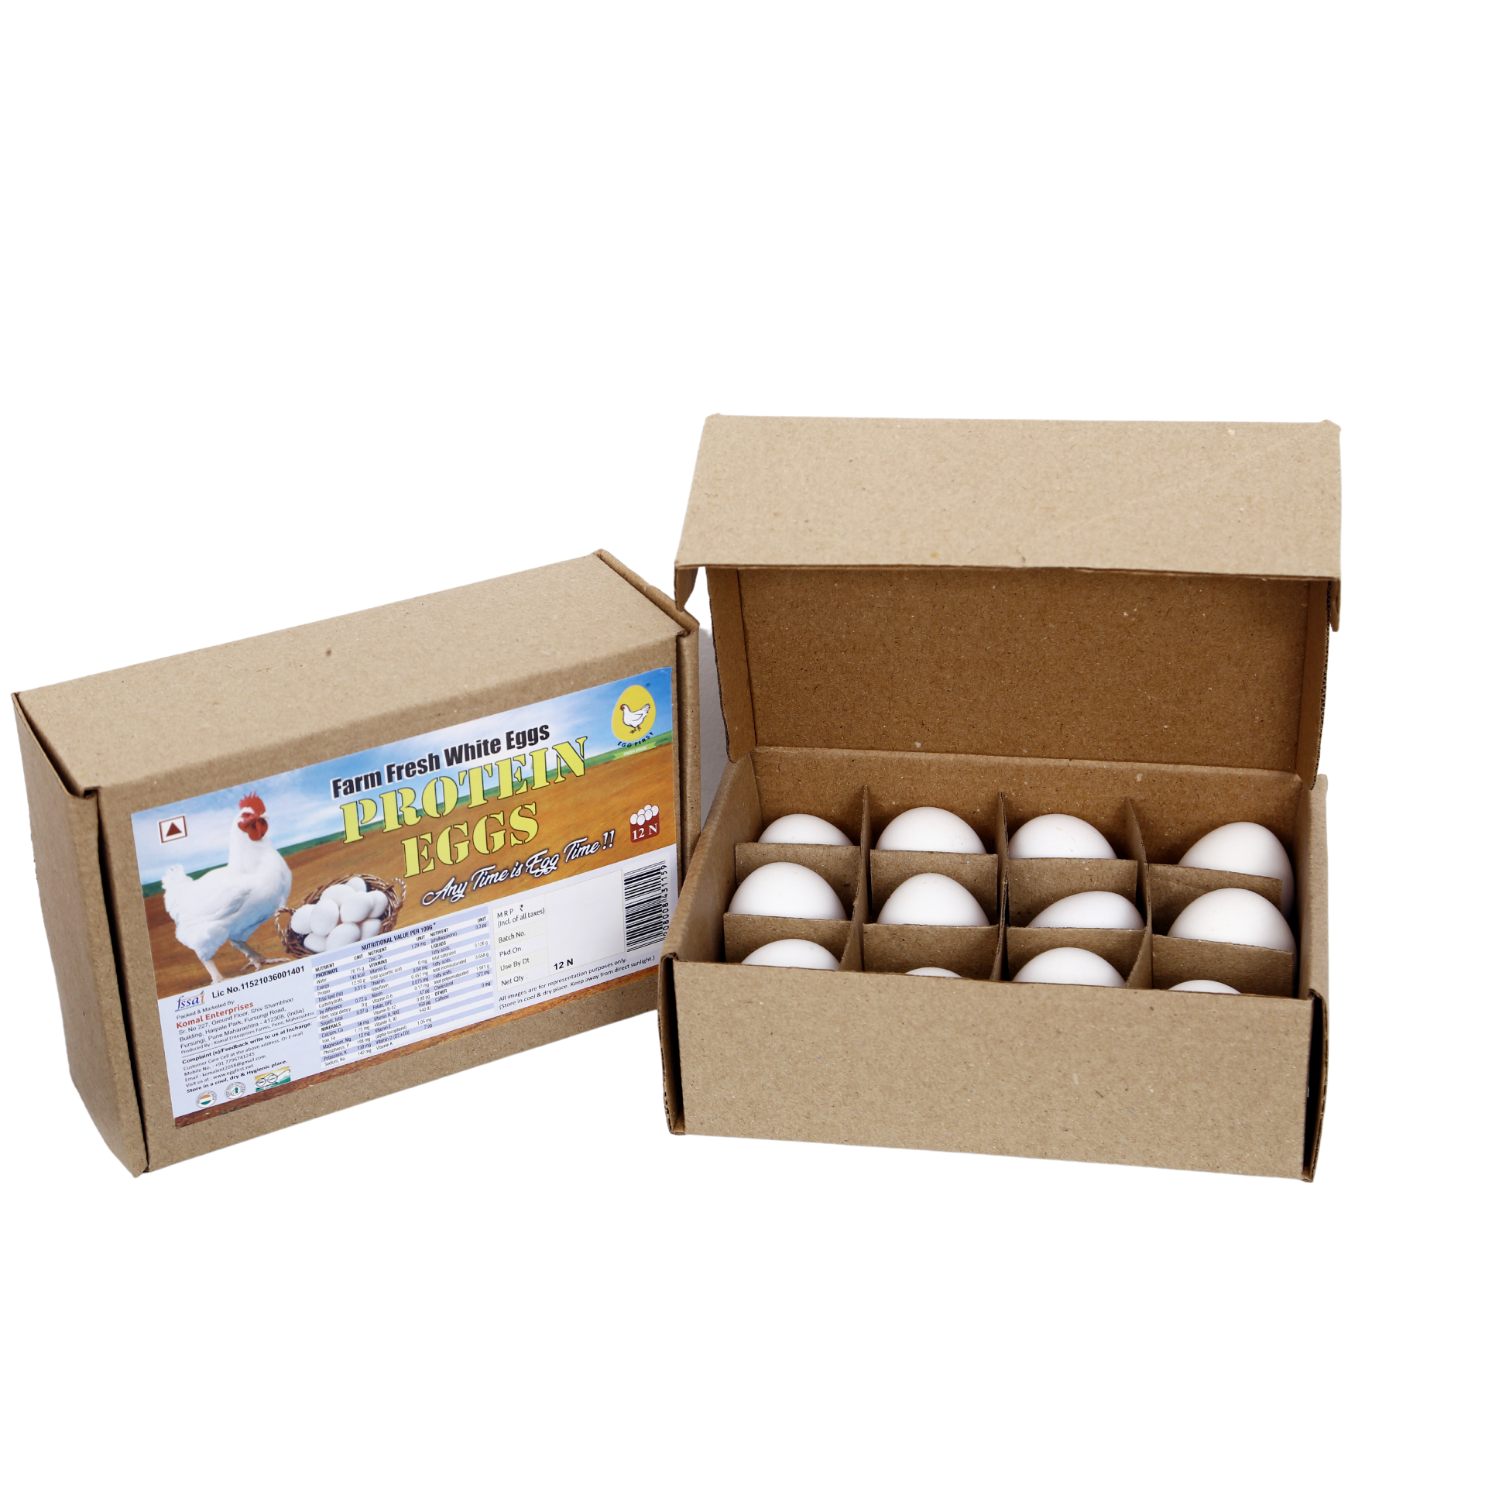 Egg First White Eggs Pack Of 12 Try